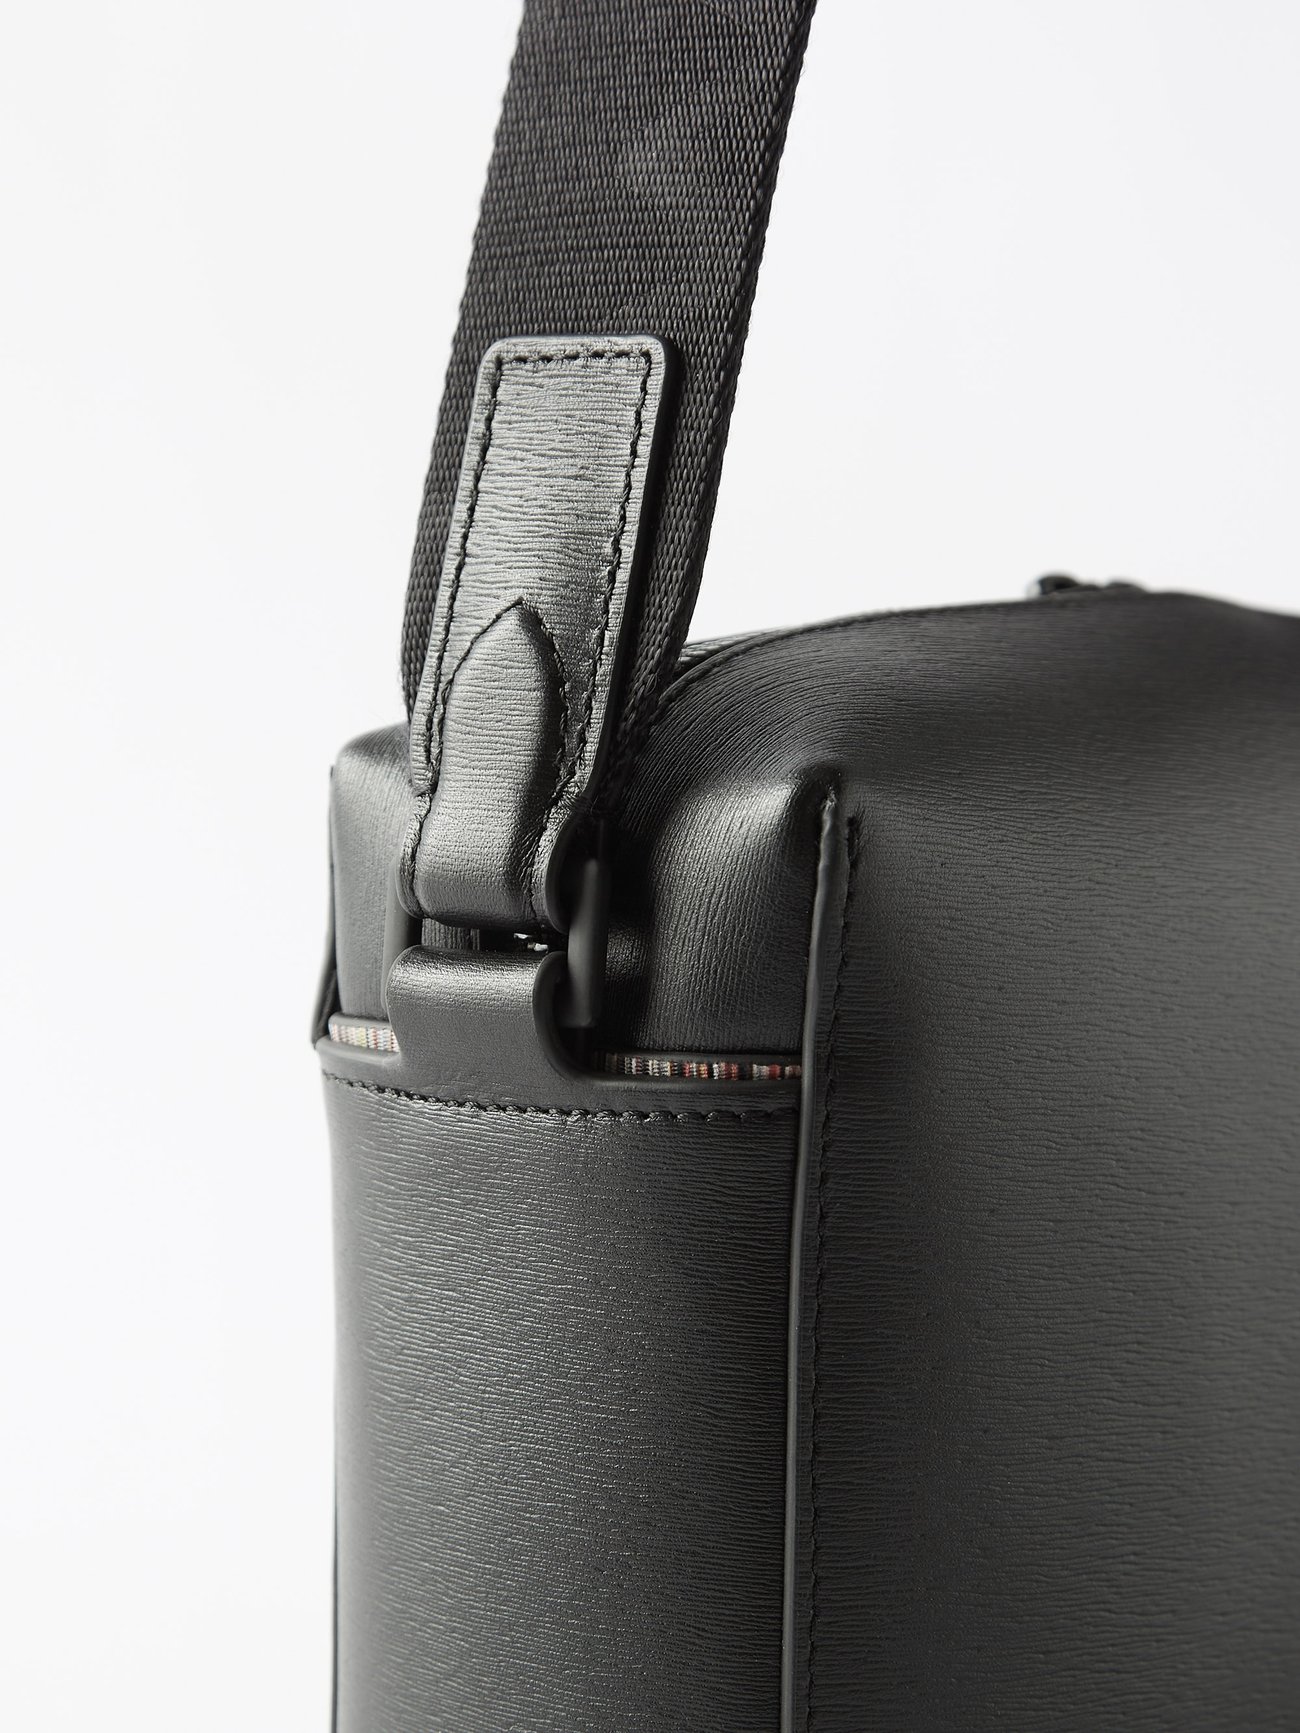 Paul Smith Leather & Travel - Handbags